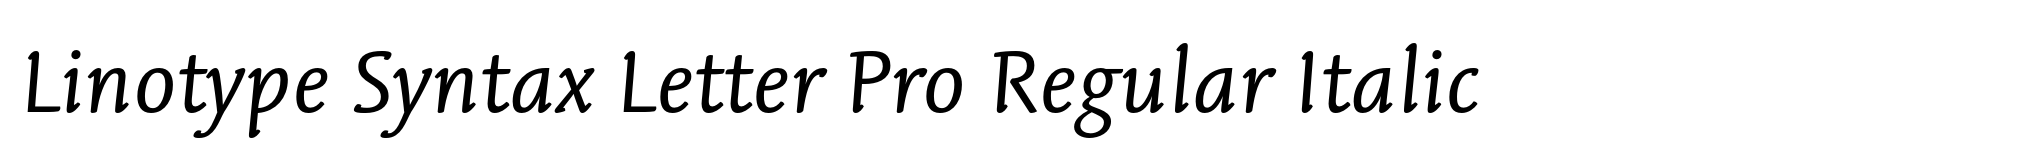 Linotype Syntax Letter Pro Regular Italic image